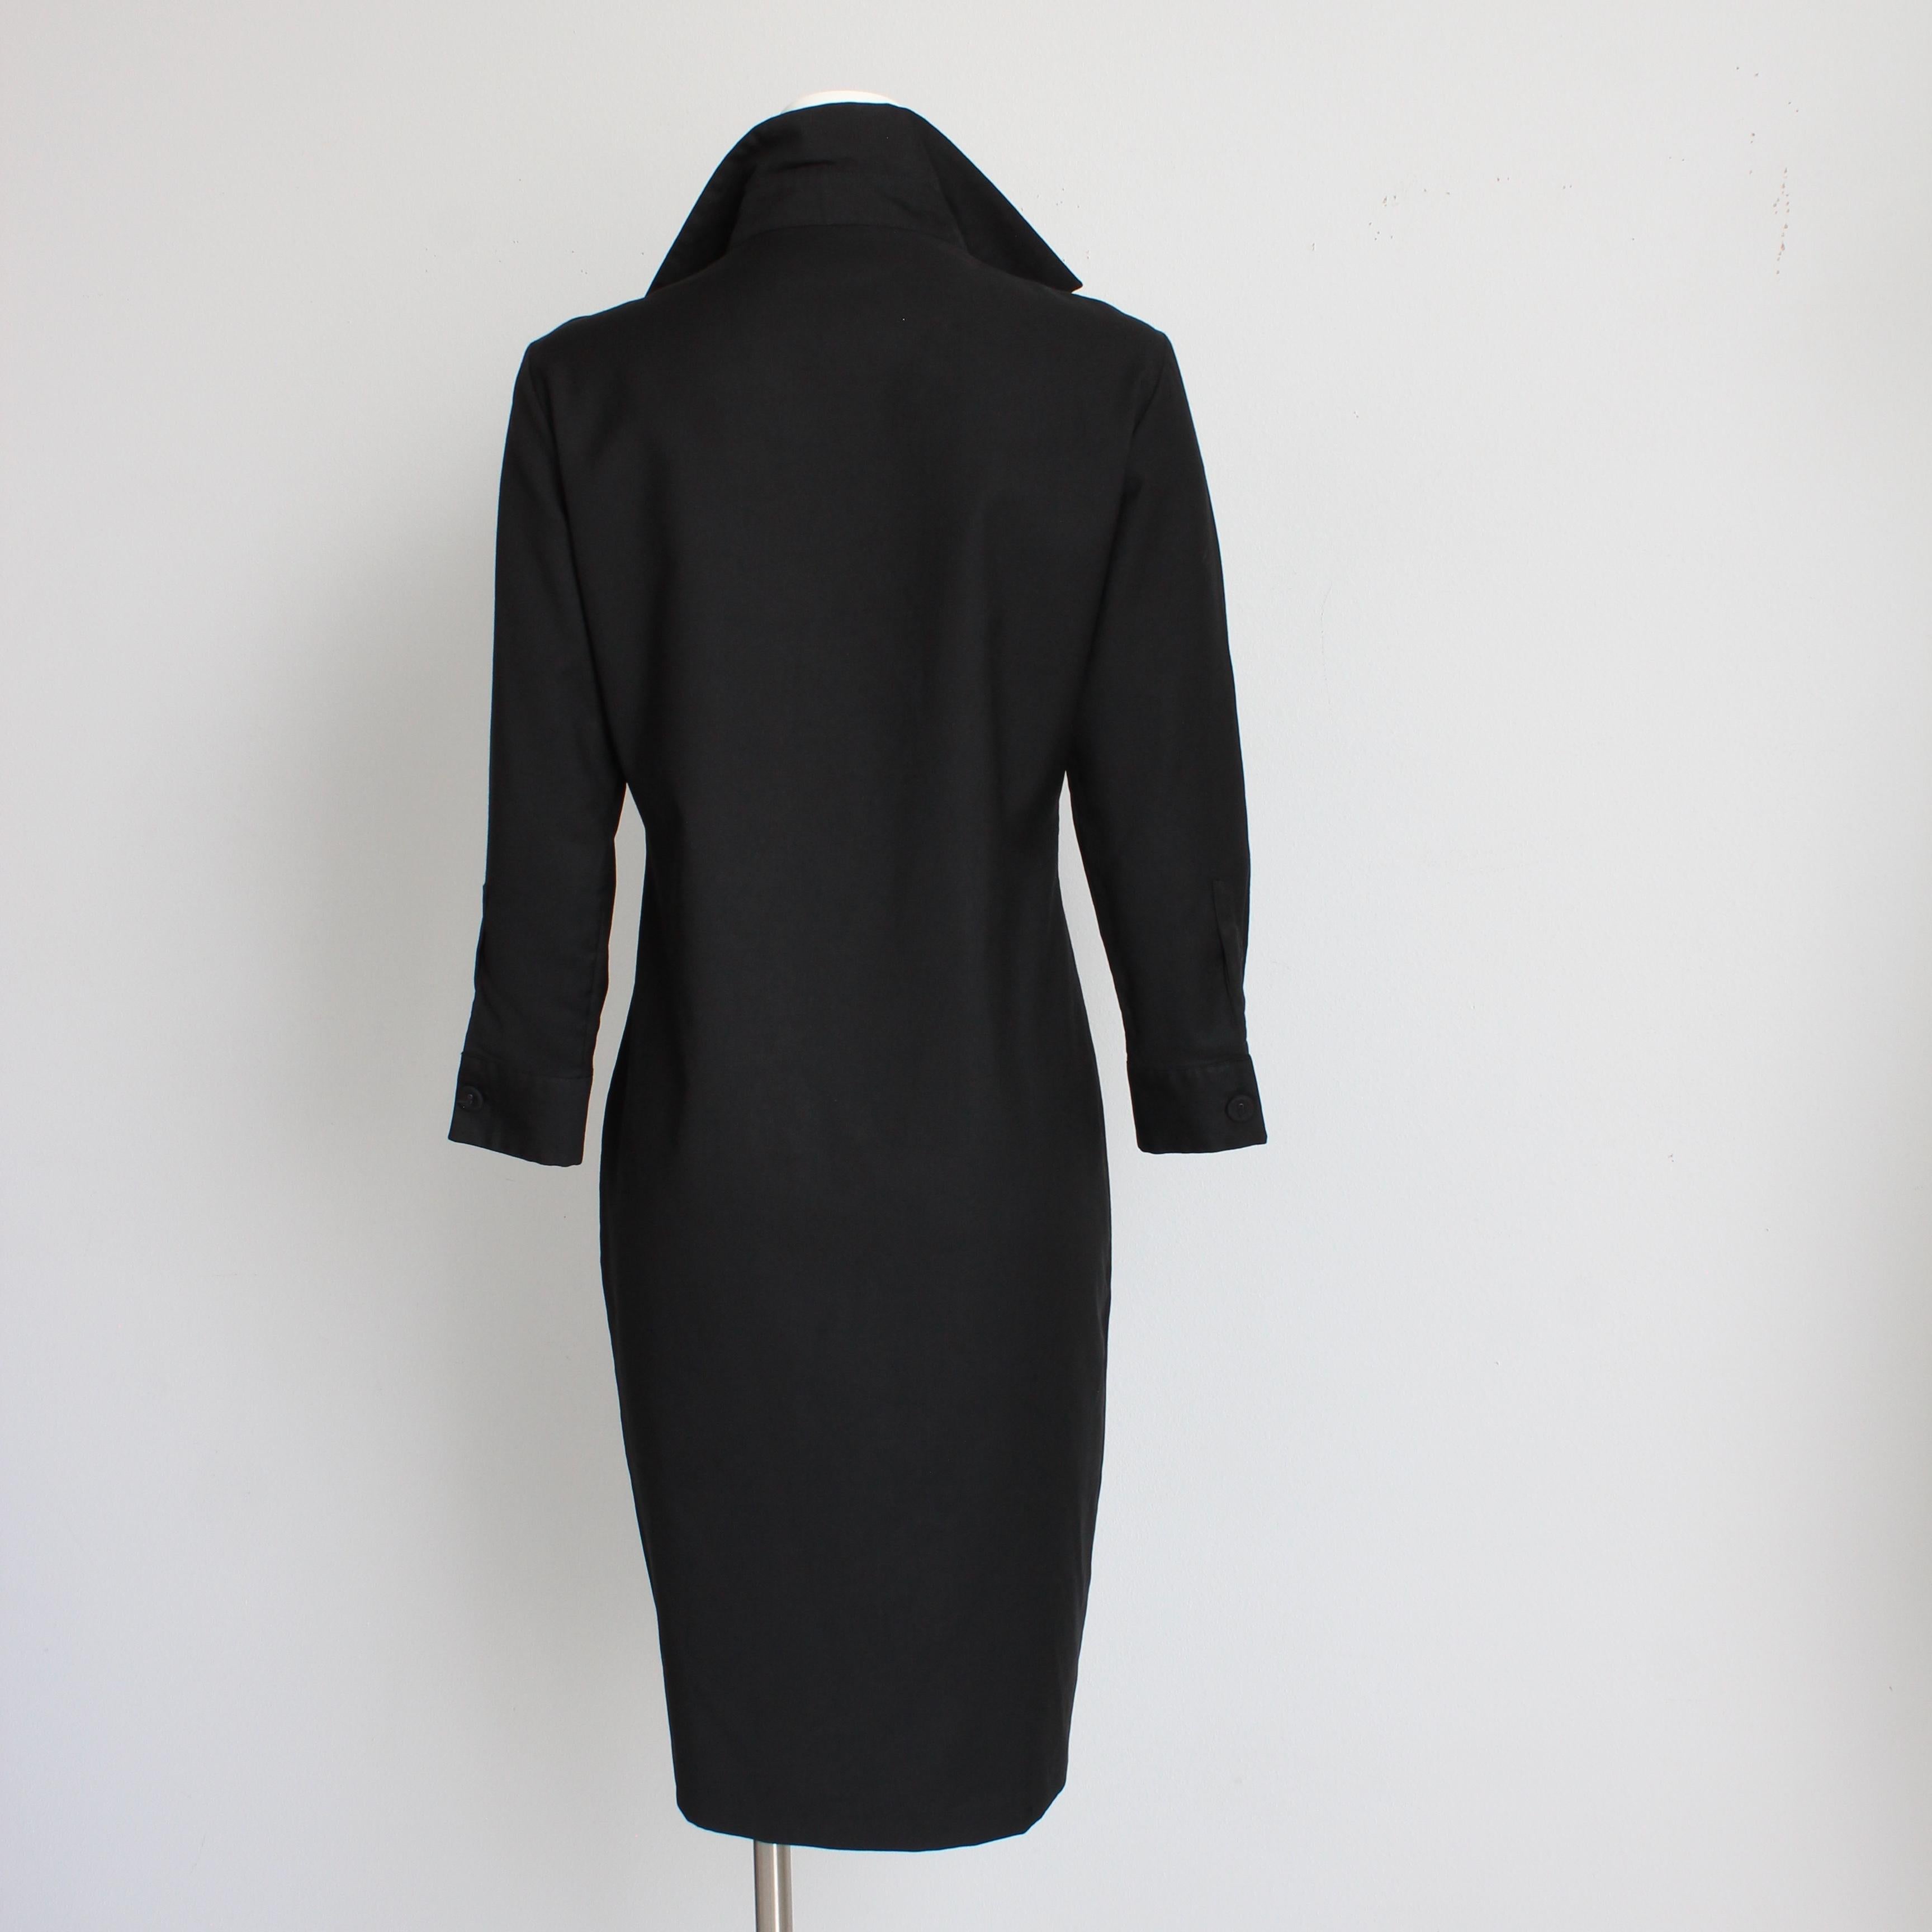 Bottega Veneta Dress Black Wool Twill Shirtwaist LBD Button Front Sz 42 Italy For Sale 5